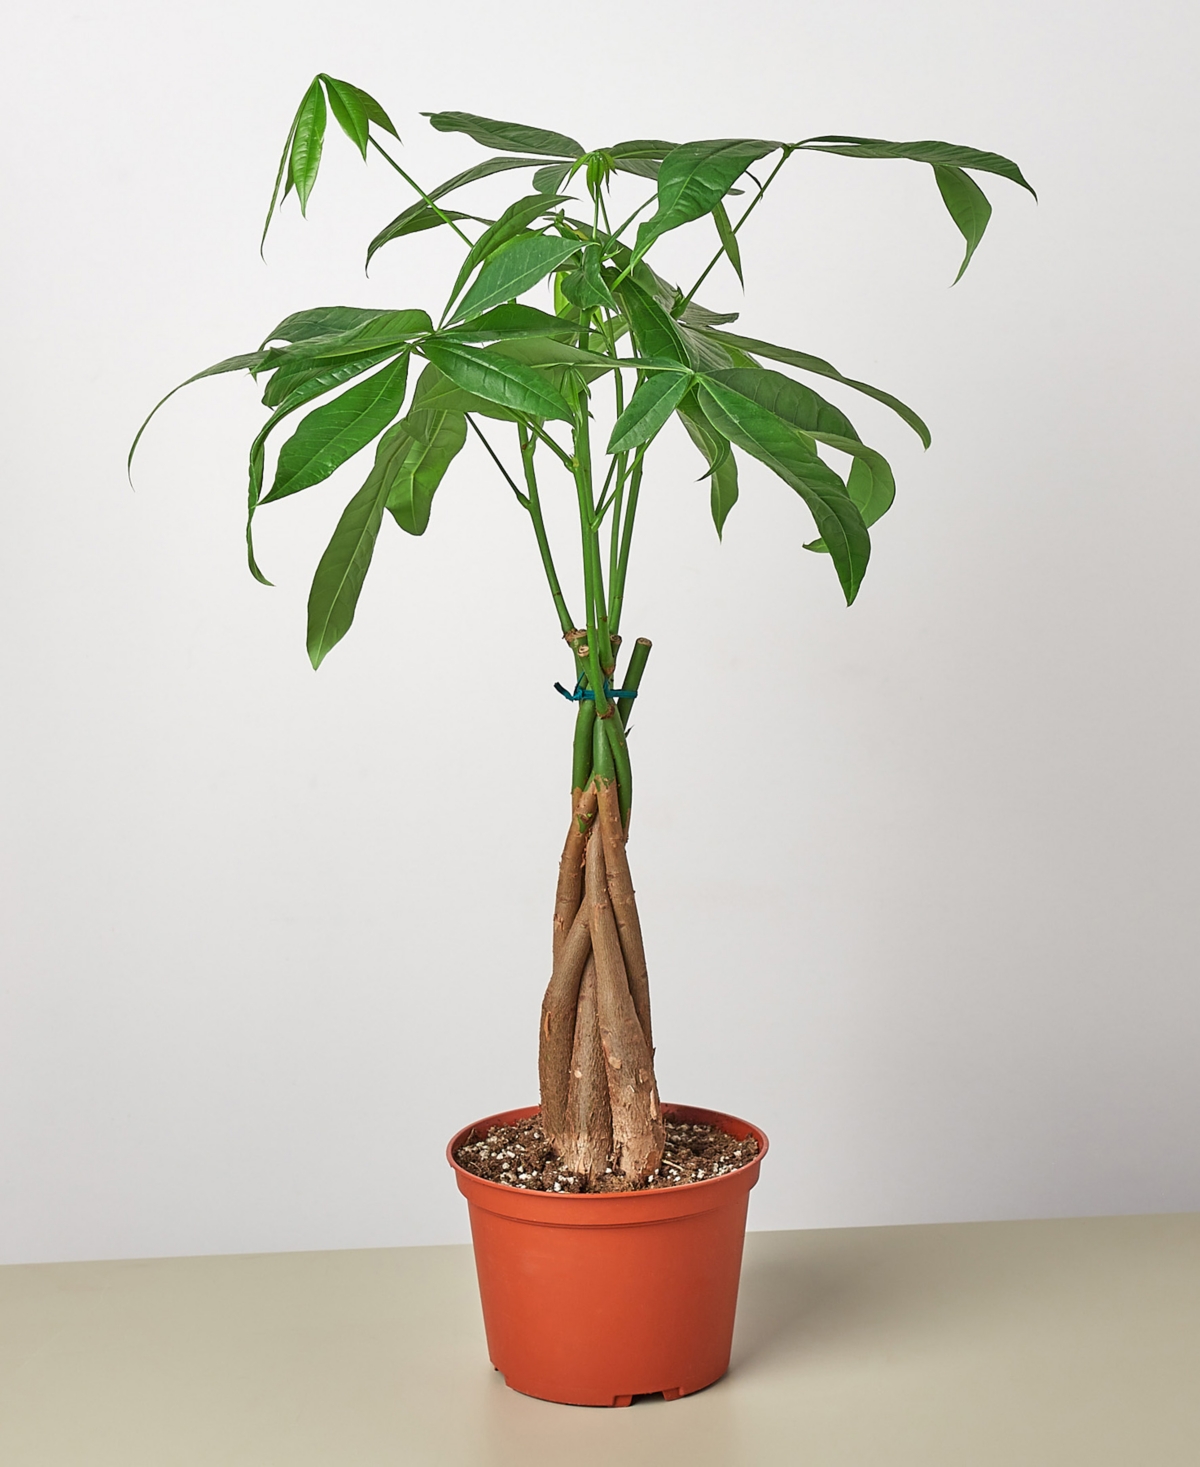 Money Tree 'Guiana Chestnut' Pachira Braid Live Plant, 6" Pot